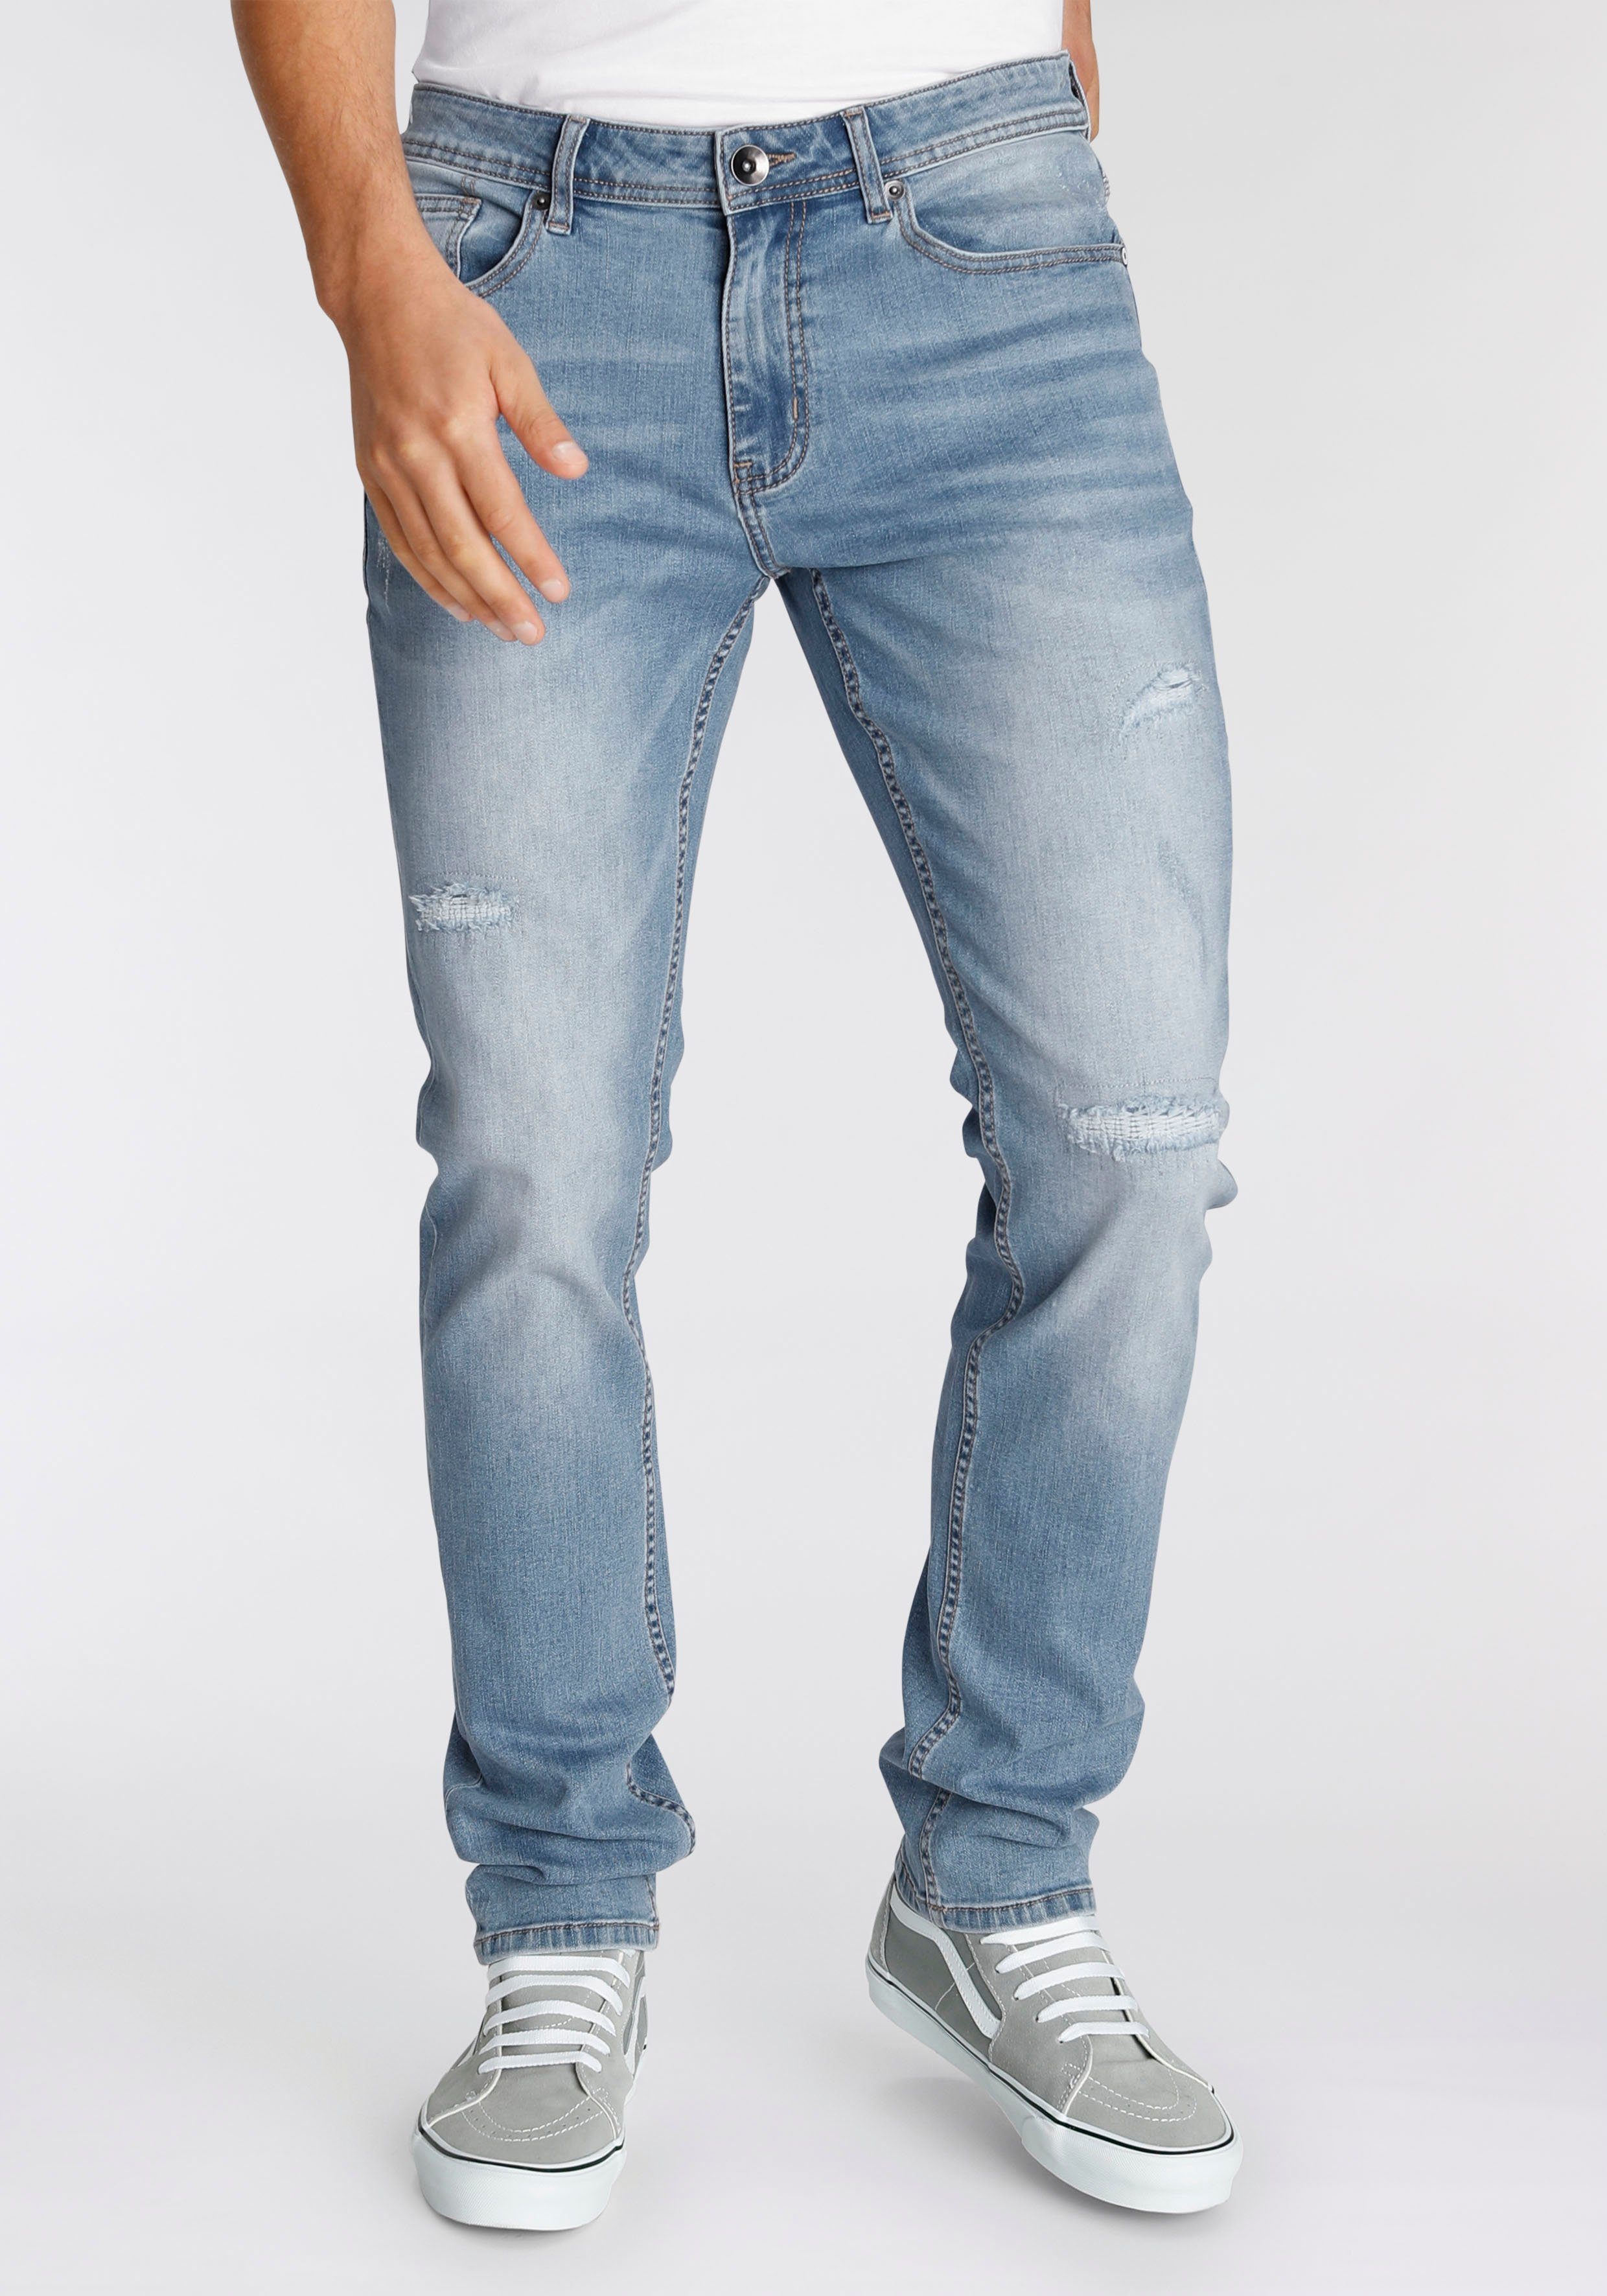 AJC Straight-Jeans mit Abriebeffekten an den Beinen light blue